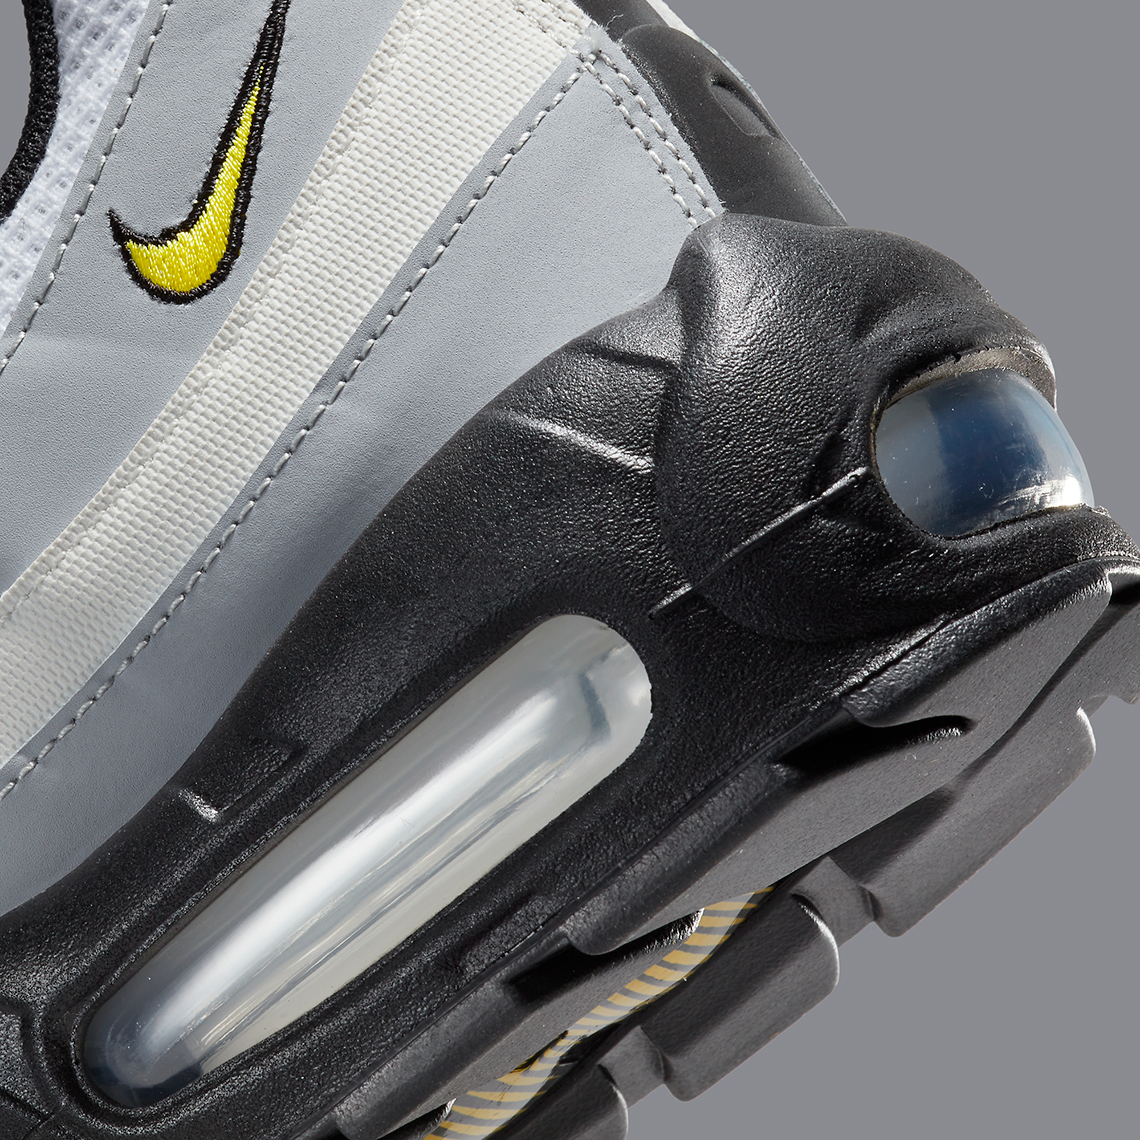 The Nike Air Max 95 Metallic Gold Releases Tomorrow •